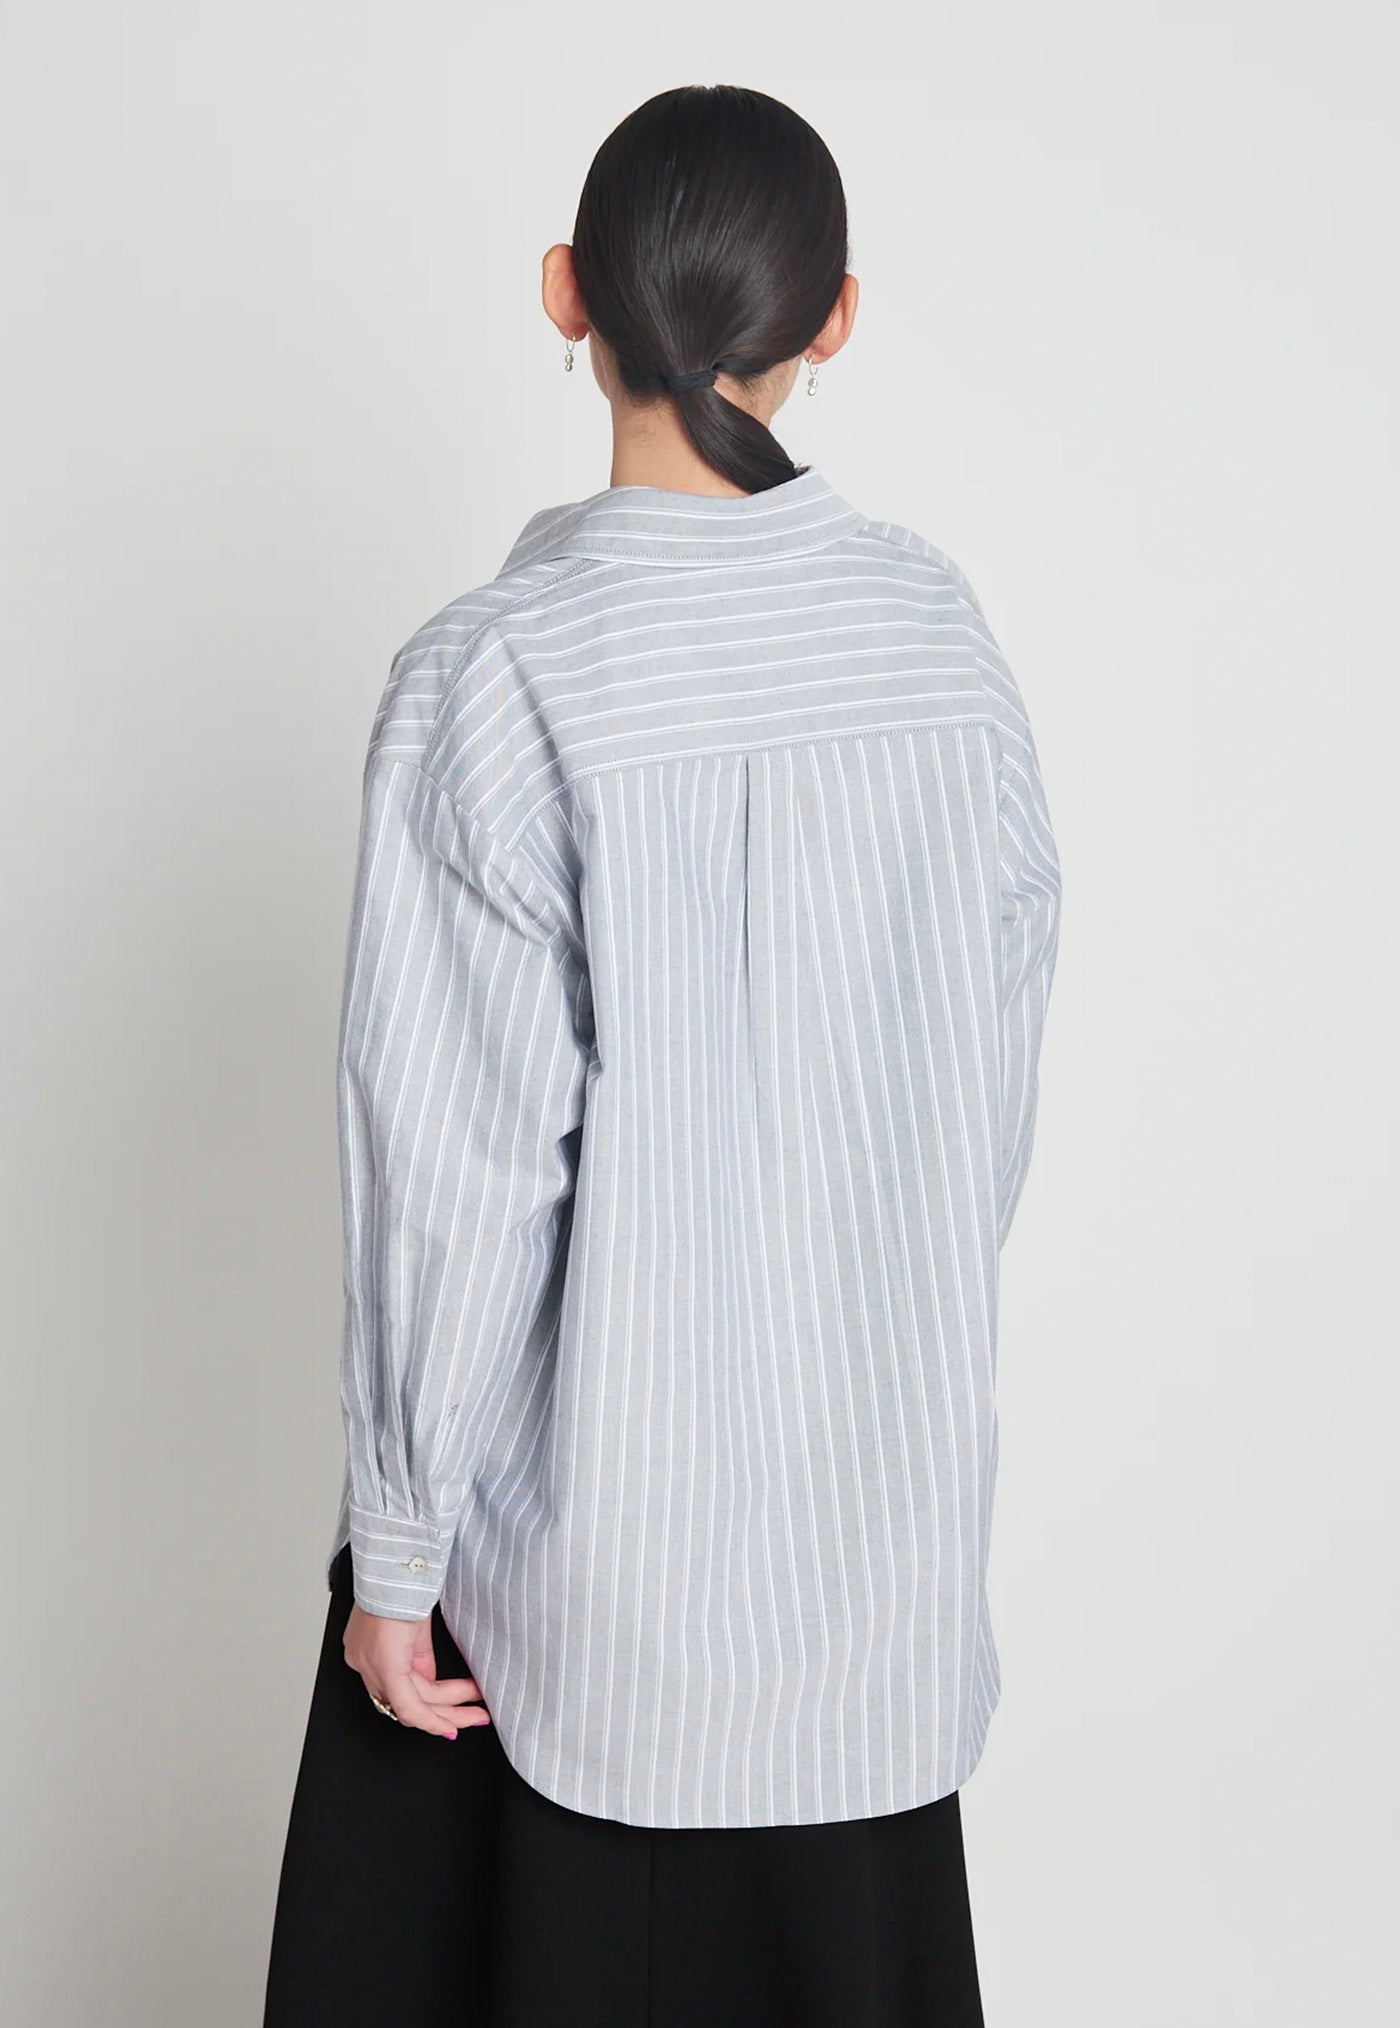 Zero-Gravity Shirt - Grey Stripe sold by Angel Divine